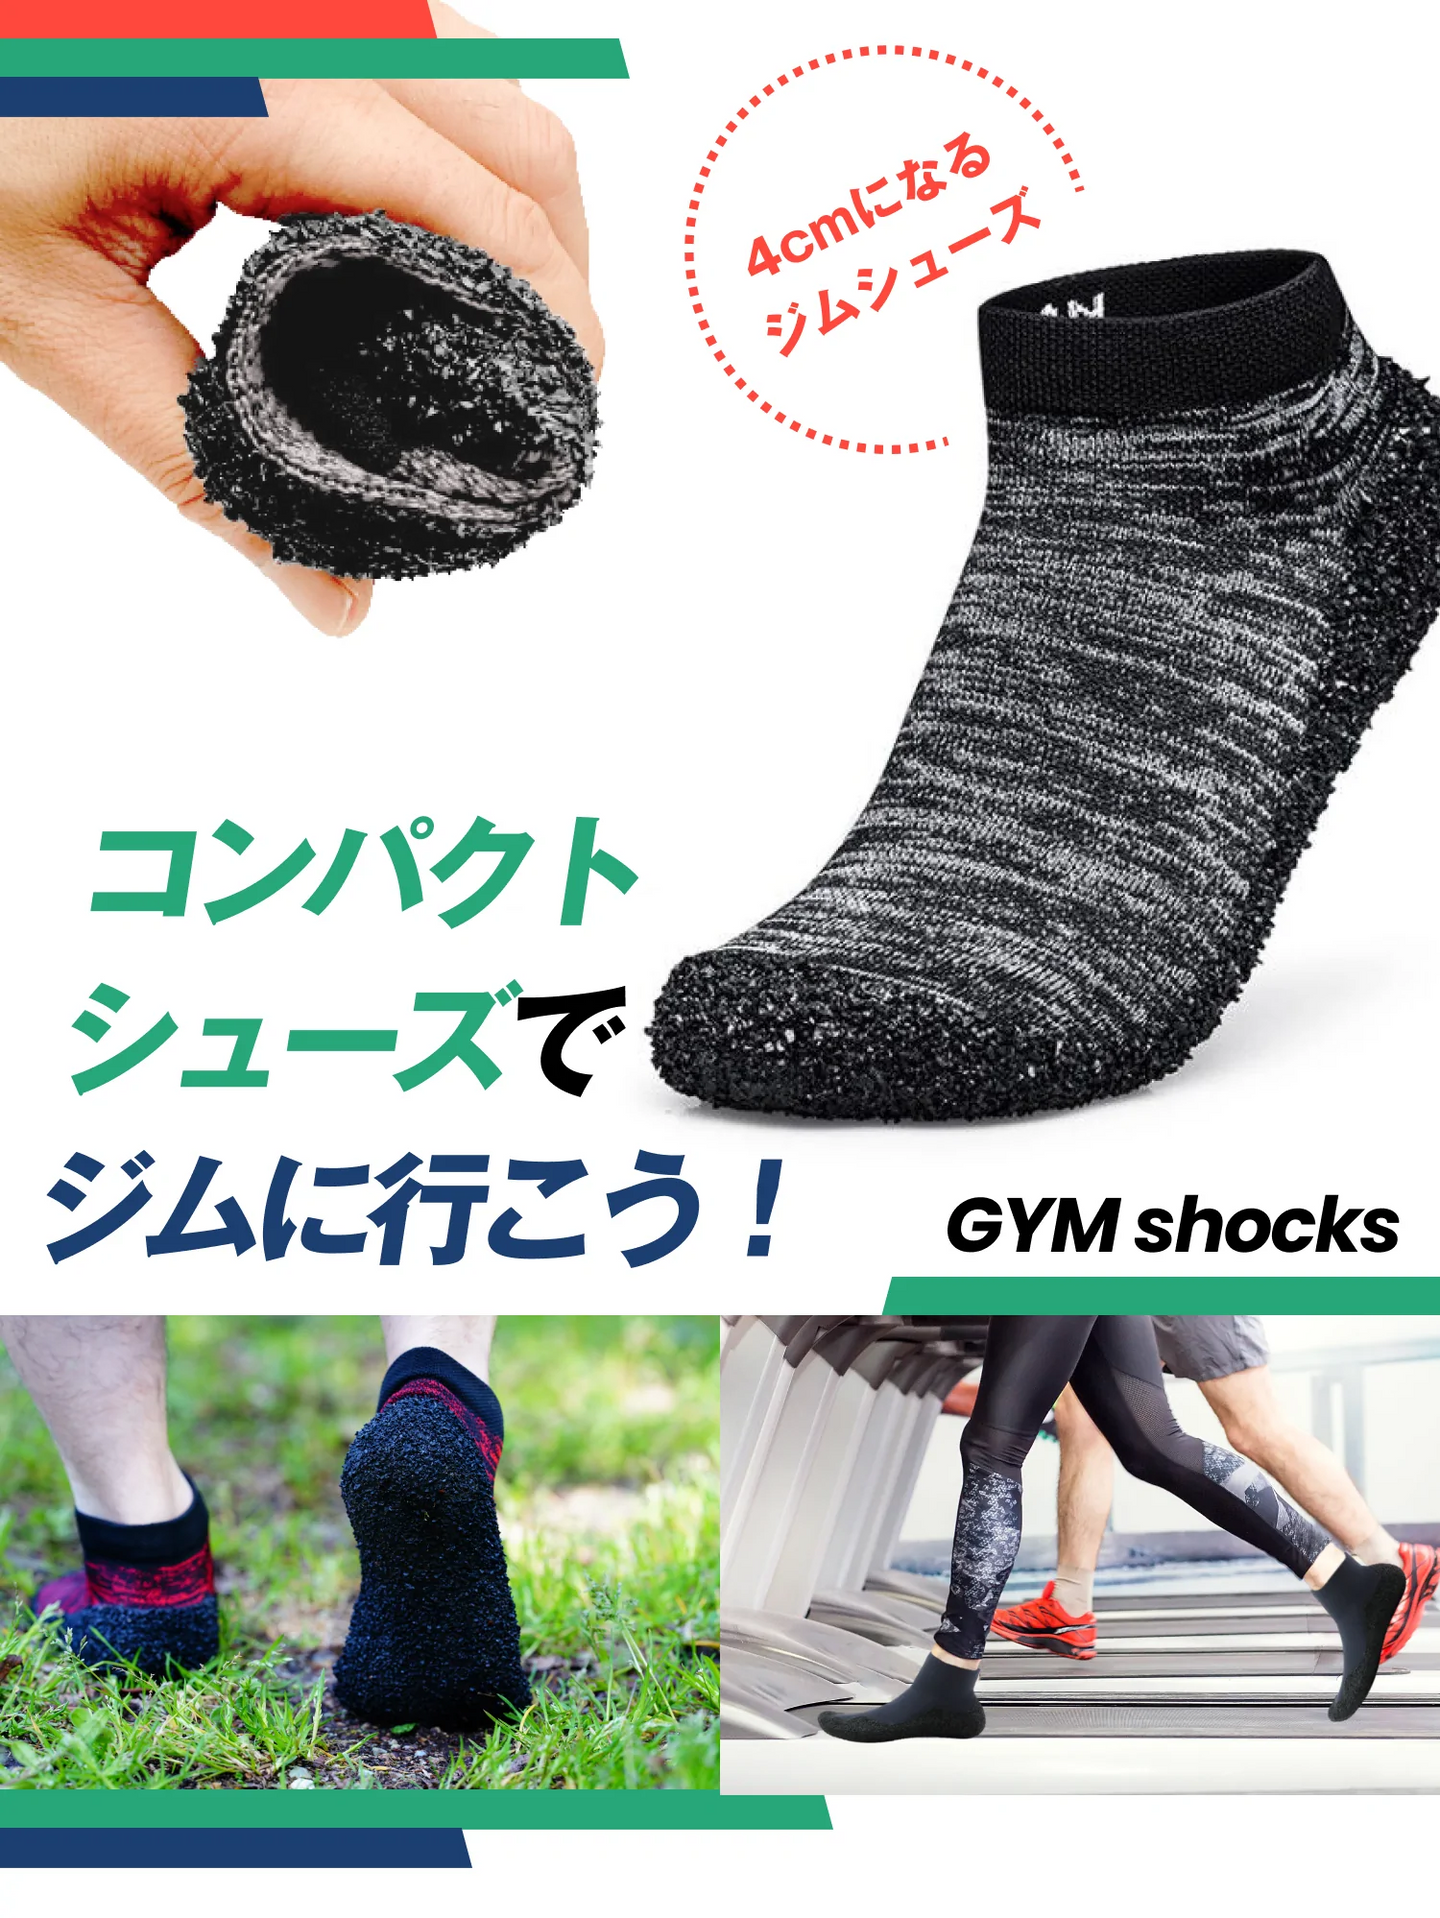 GYM Shocks - Portable shoes for gym